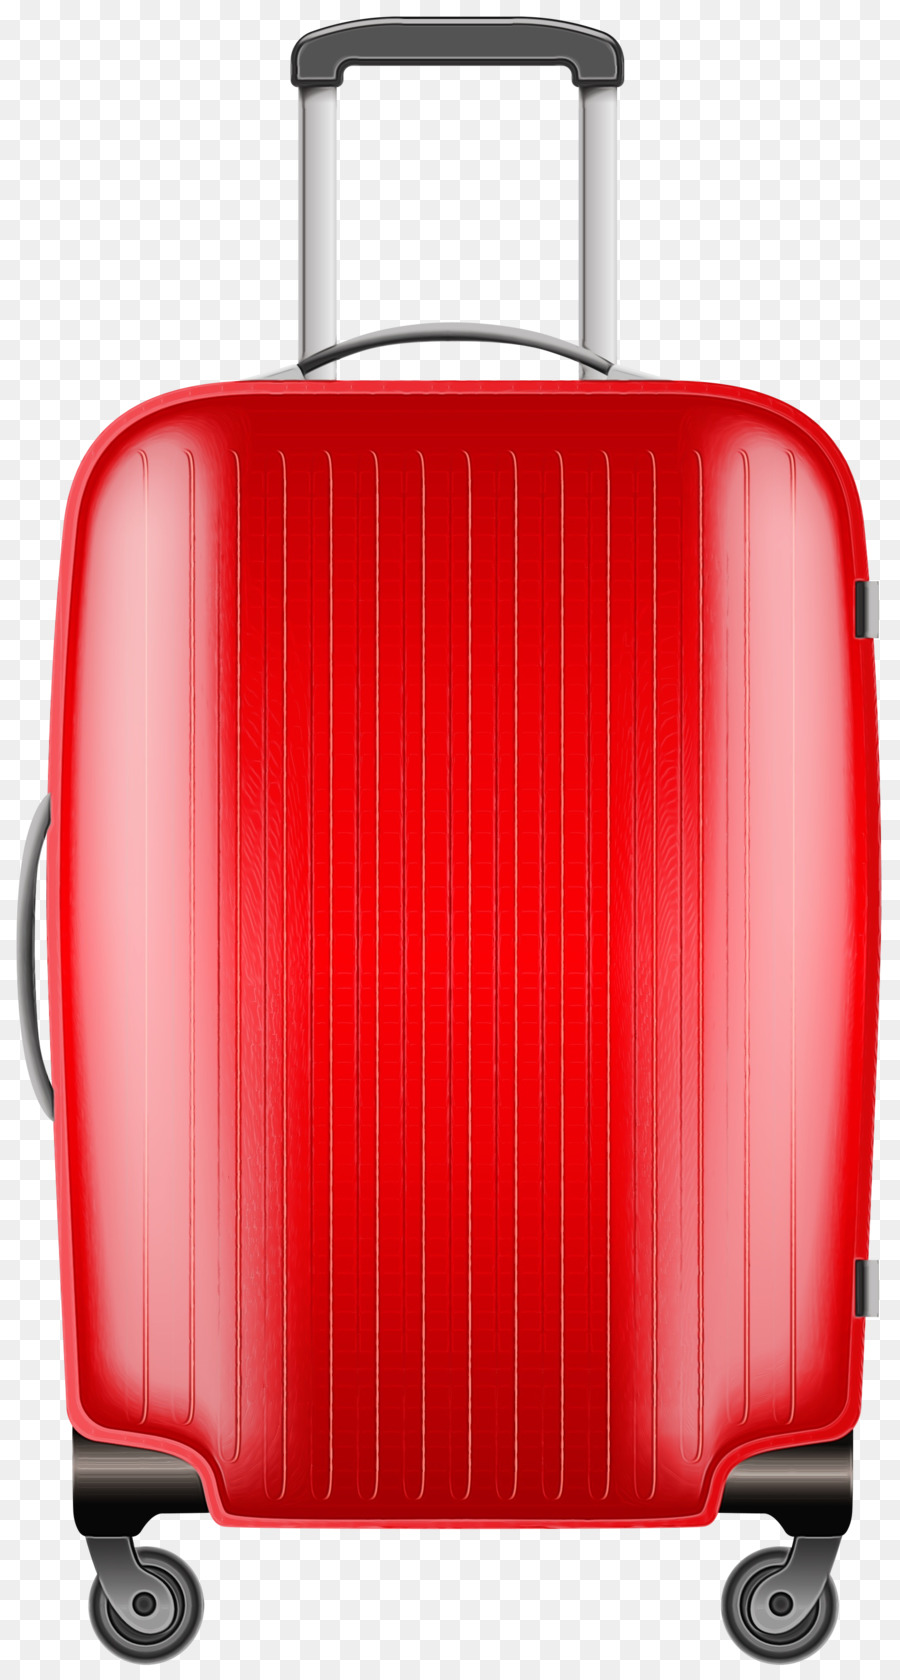 Gepäckgepäck Gepäckgepäck und Taschen des Koffers rot - 